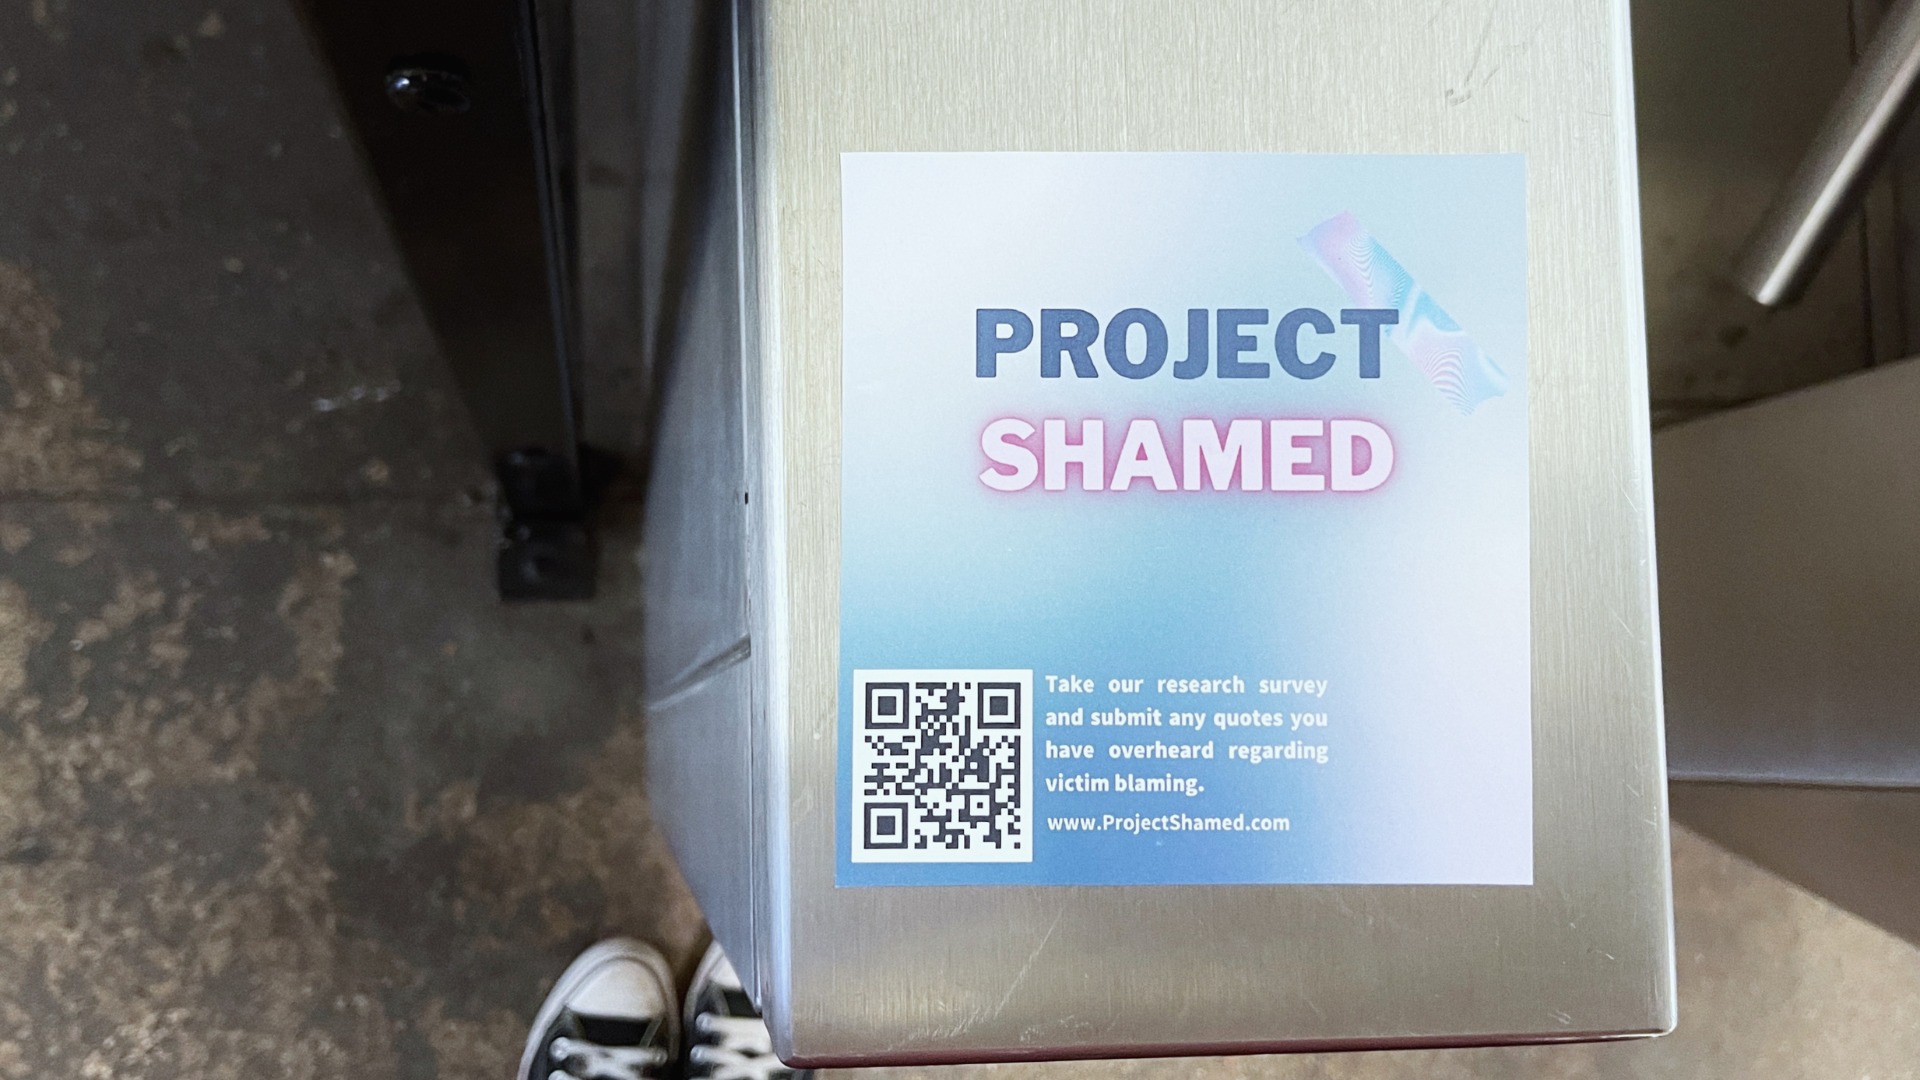 Project Shamed hashtag written on the sidewalk in chalk.